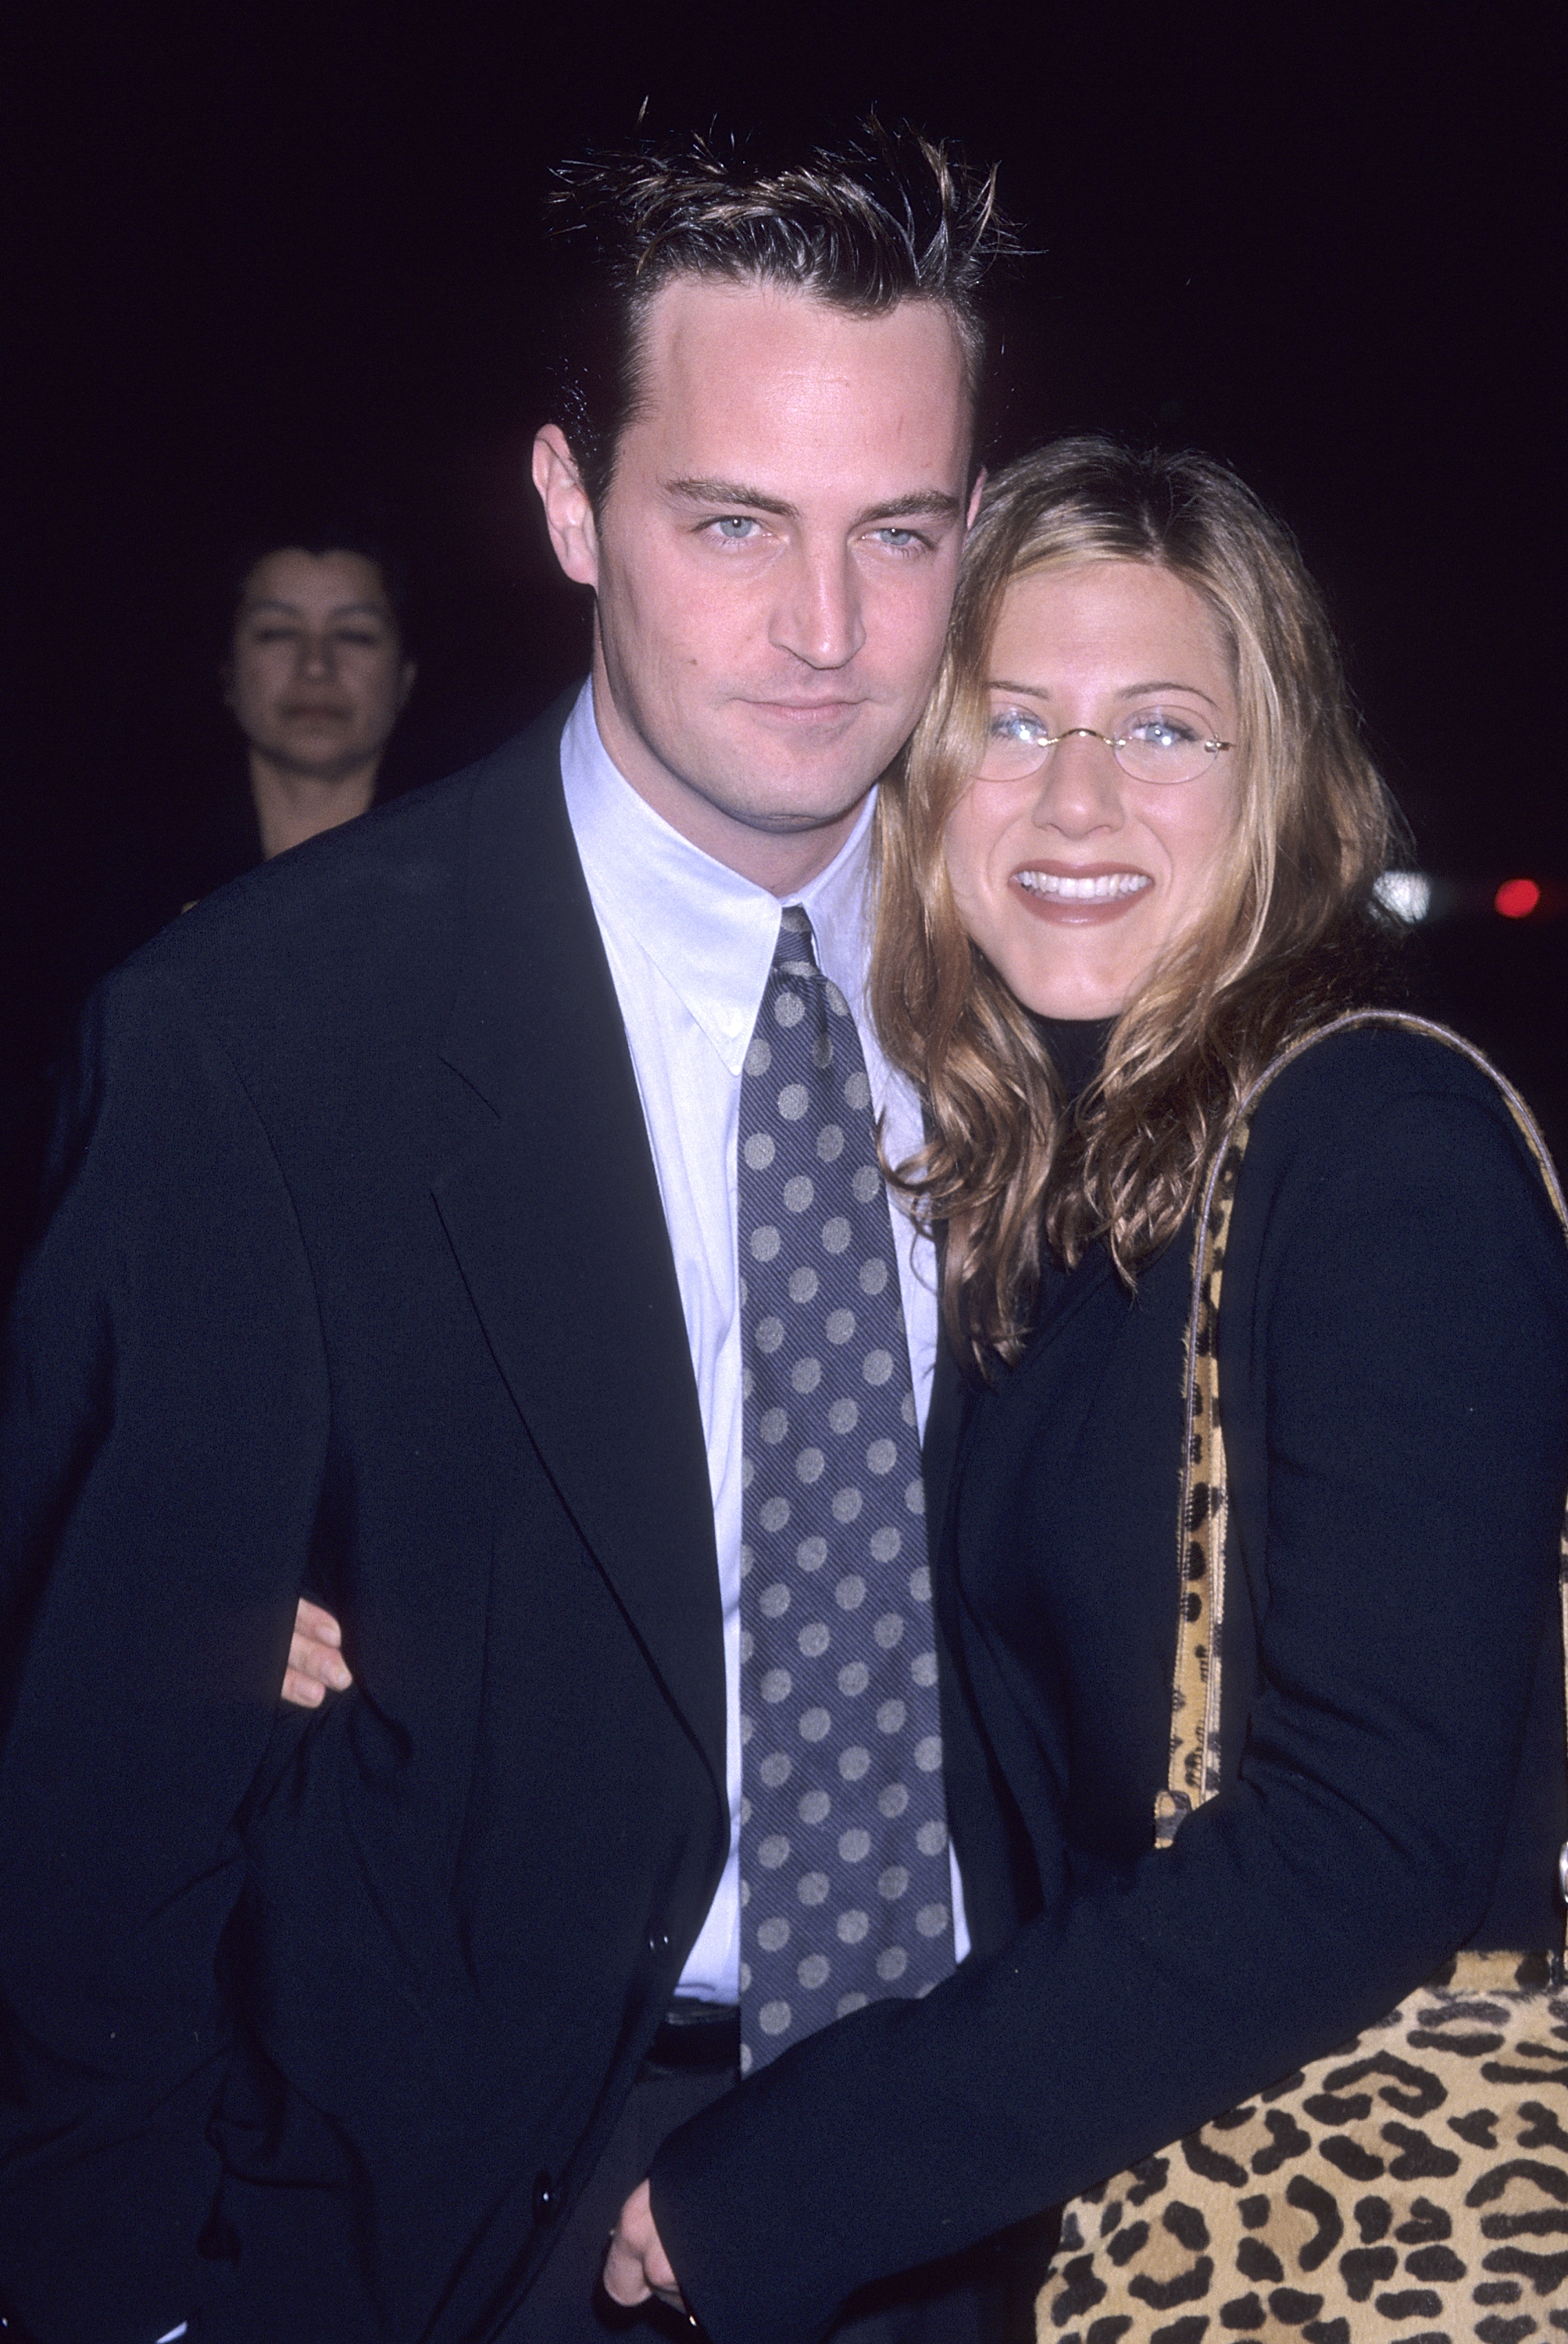 Matthew Perry y Jennifer Aniston en el estreno de "Kissing a Fool" el 18 de febrero de 1998 en Westwood, California | Foto: Getty Images